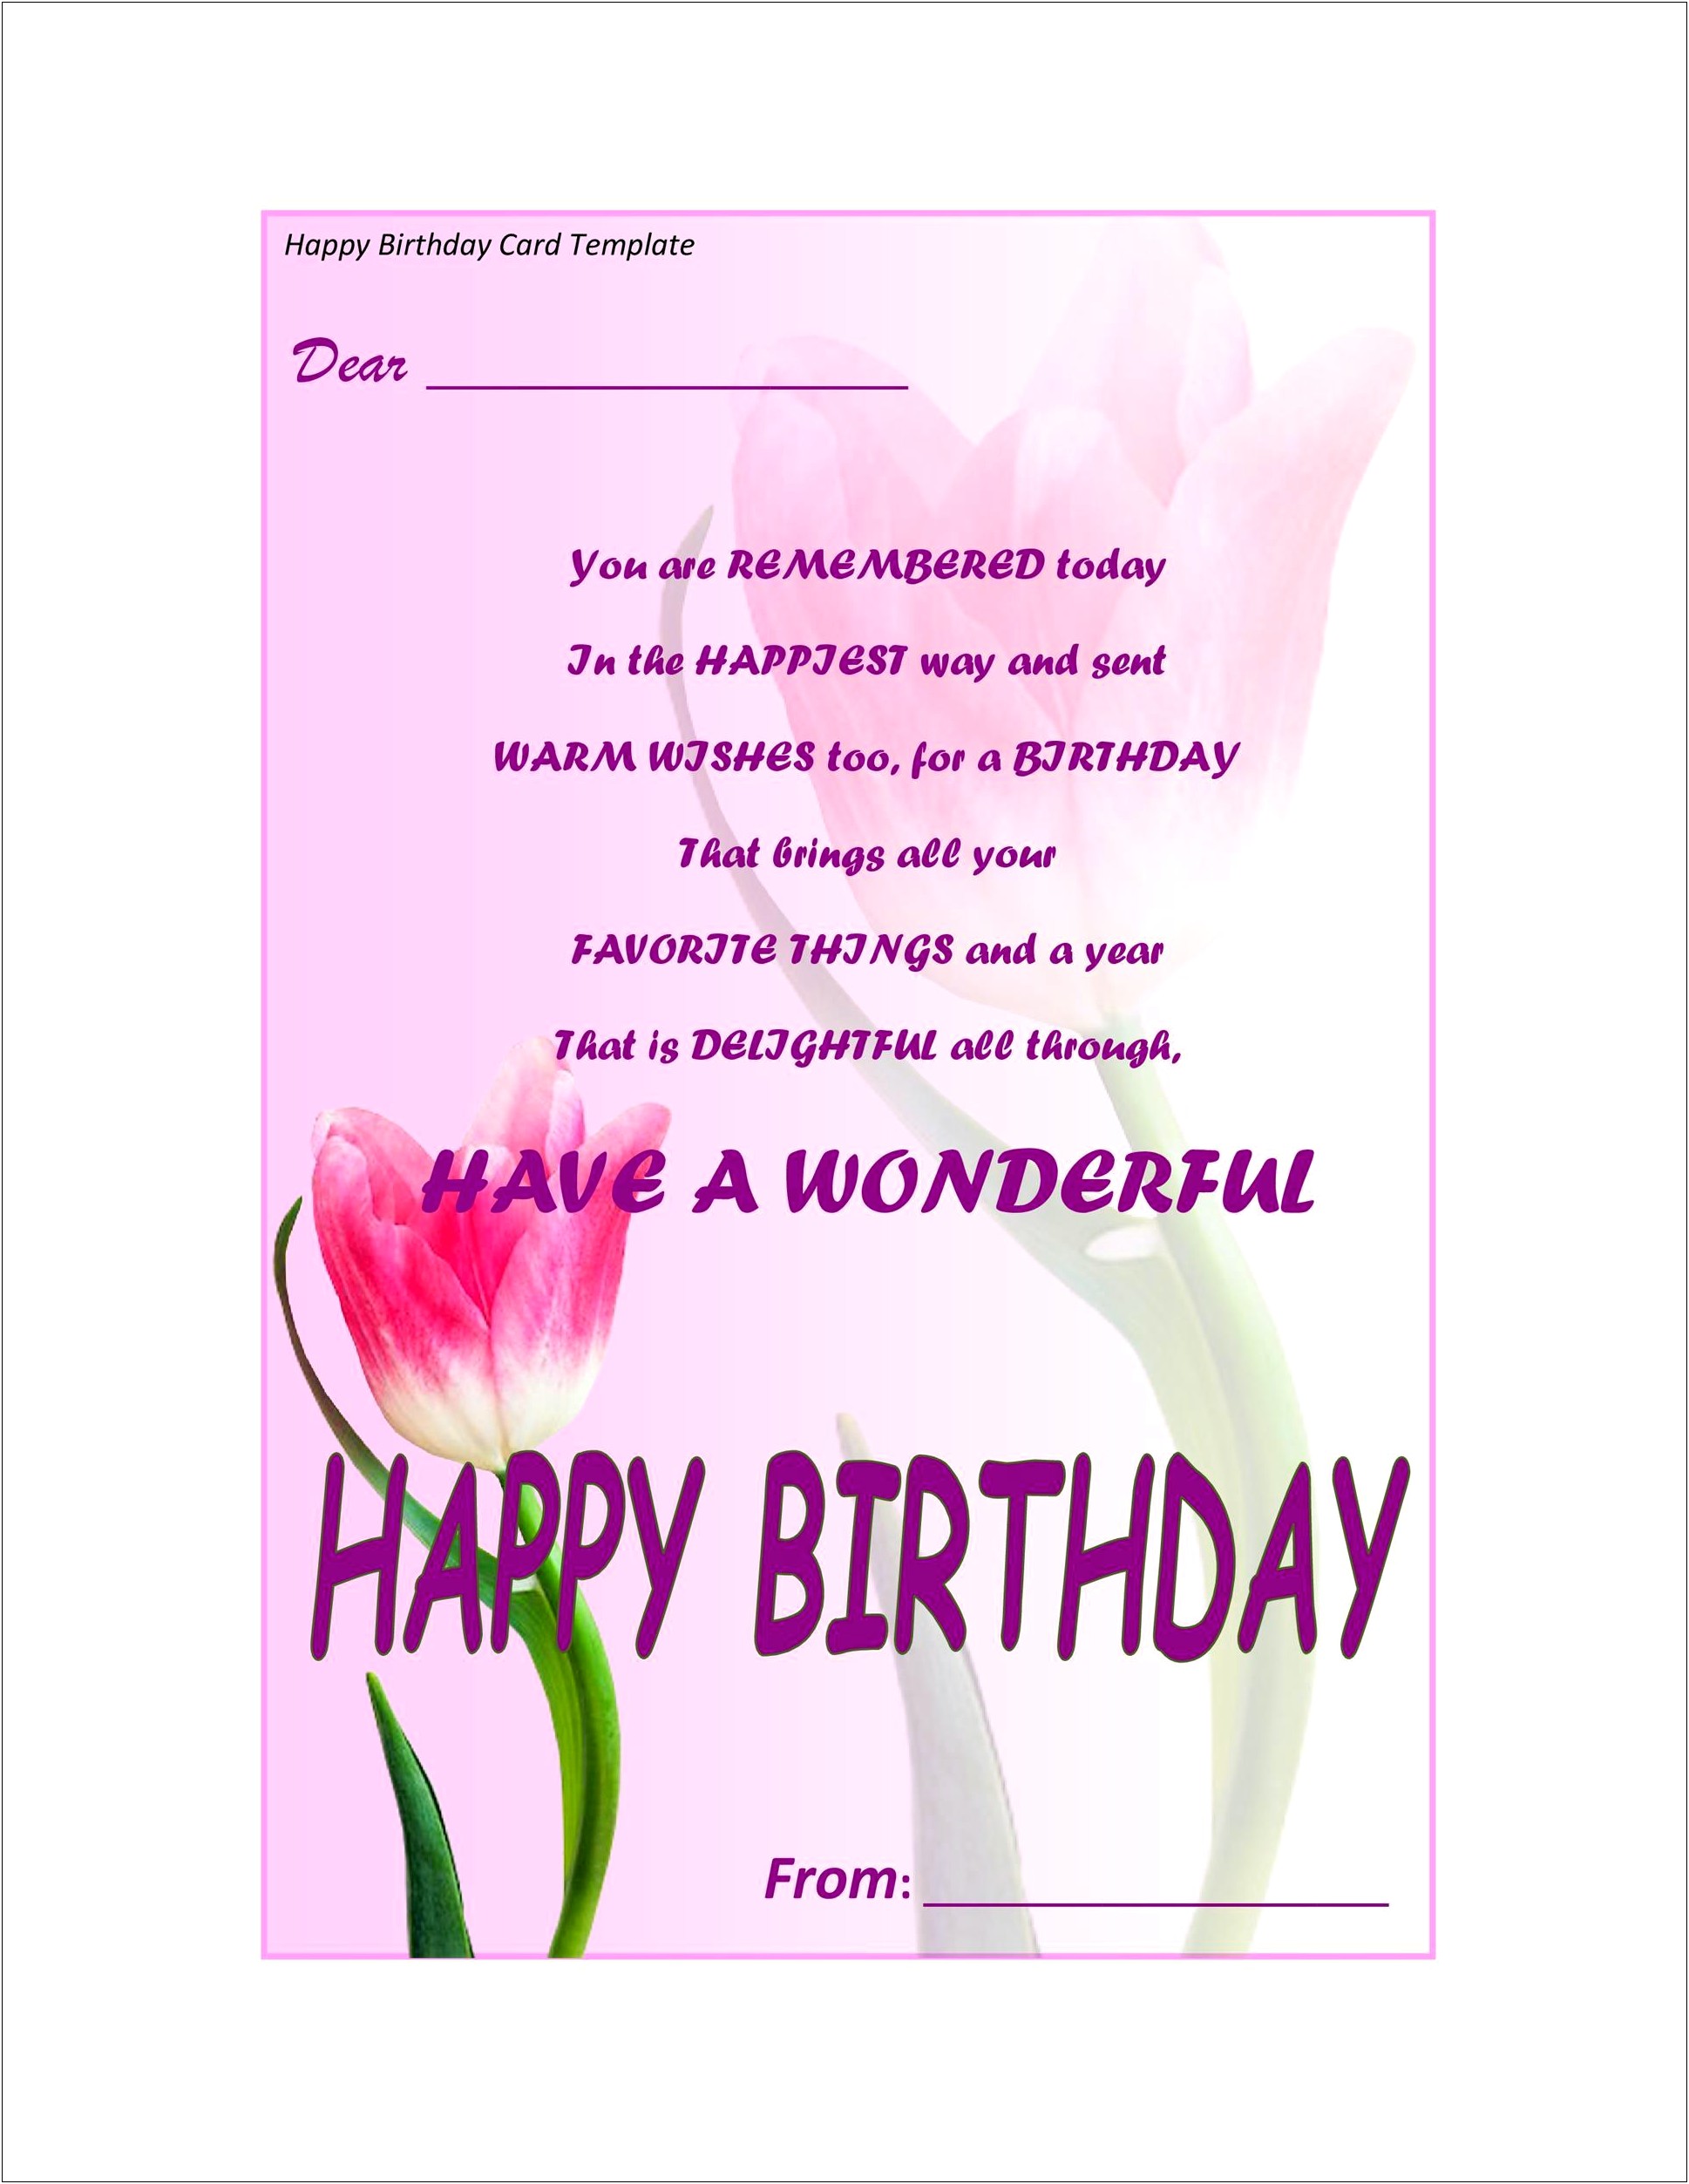 Microsoft Word Birthday Card Template Download